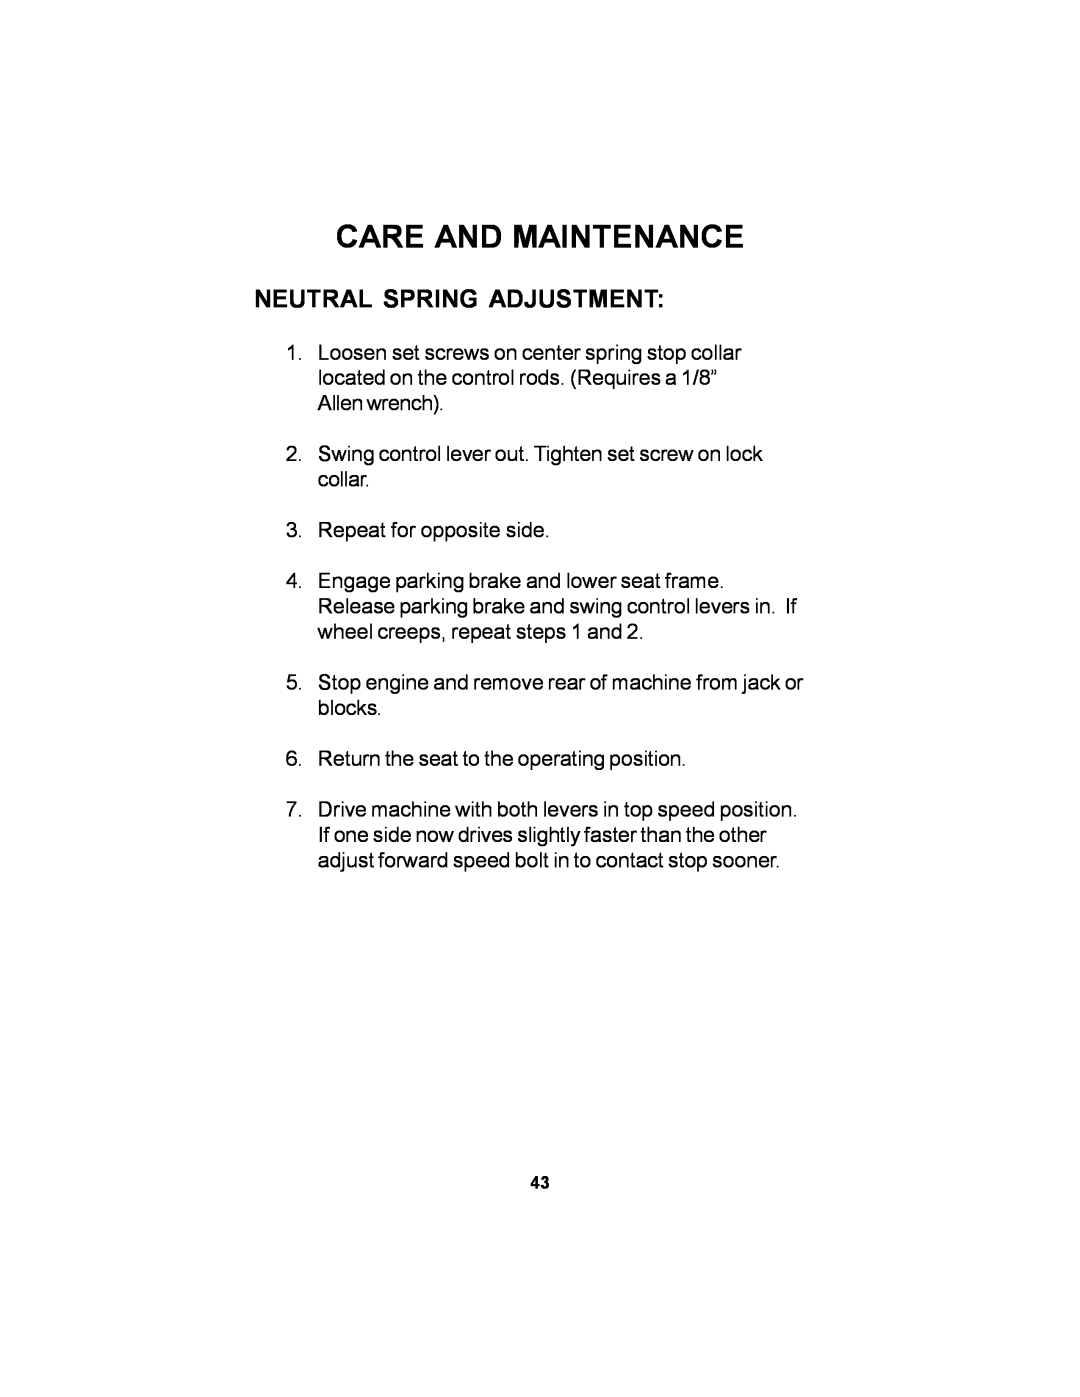 Dixon 18626-106 manual Neutral Spring Adjustment, Care And Maintenance 